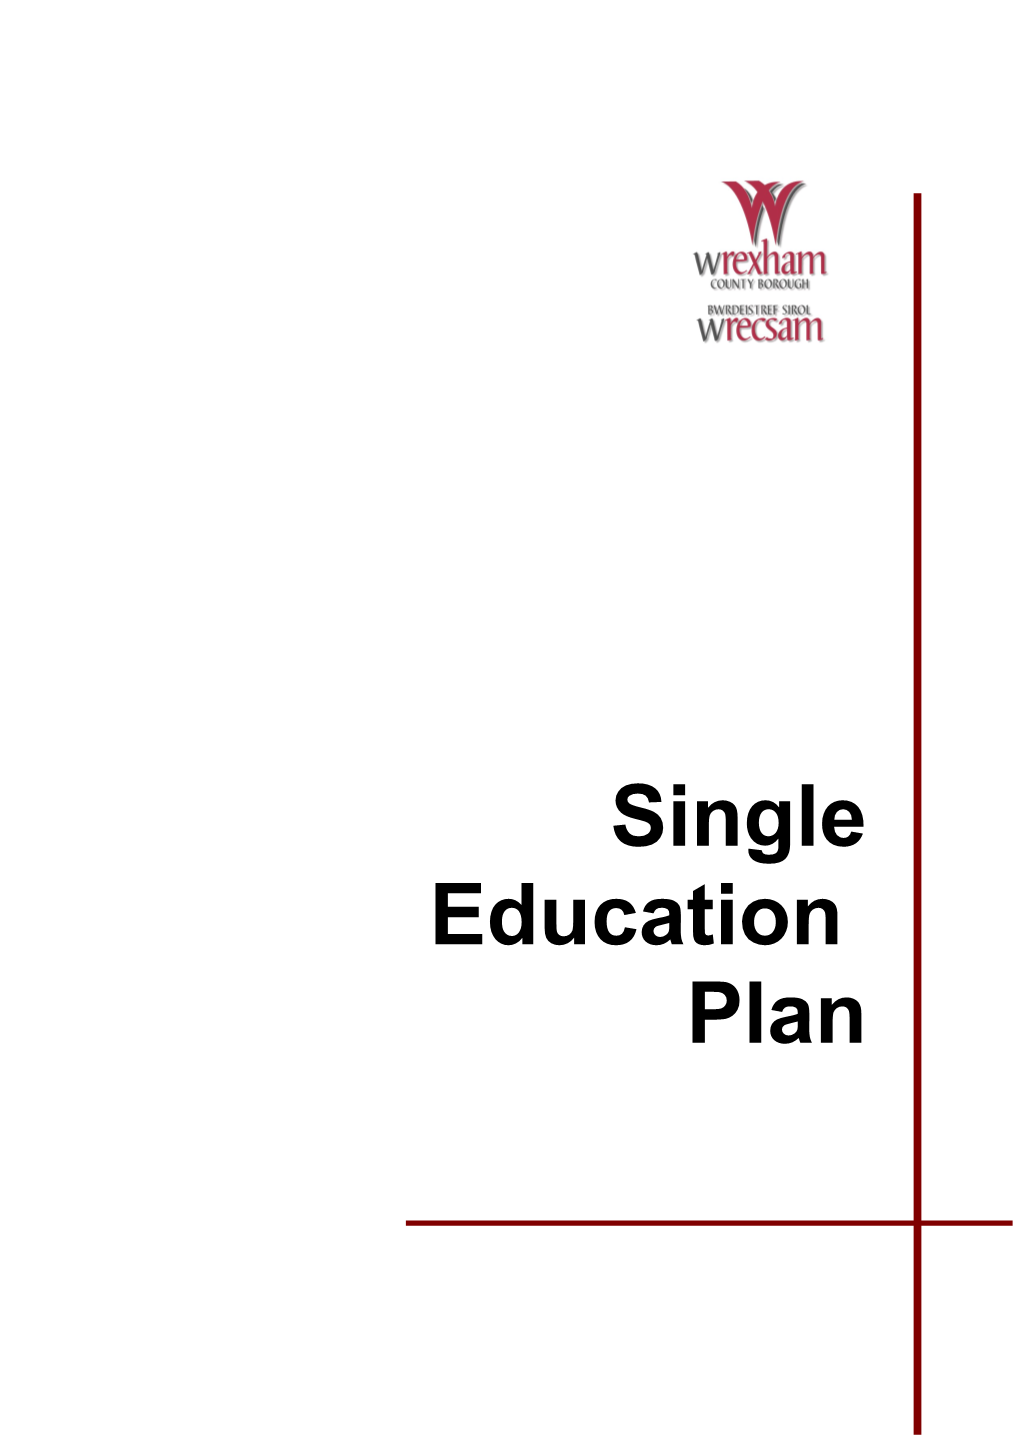 Draft Single Education Plan 2006 to 2008